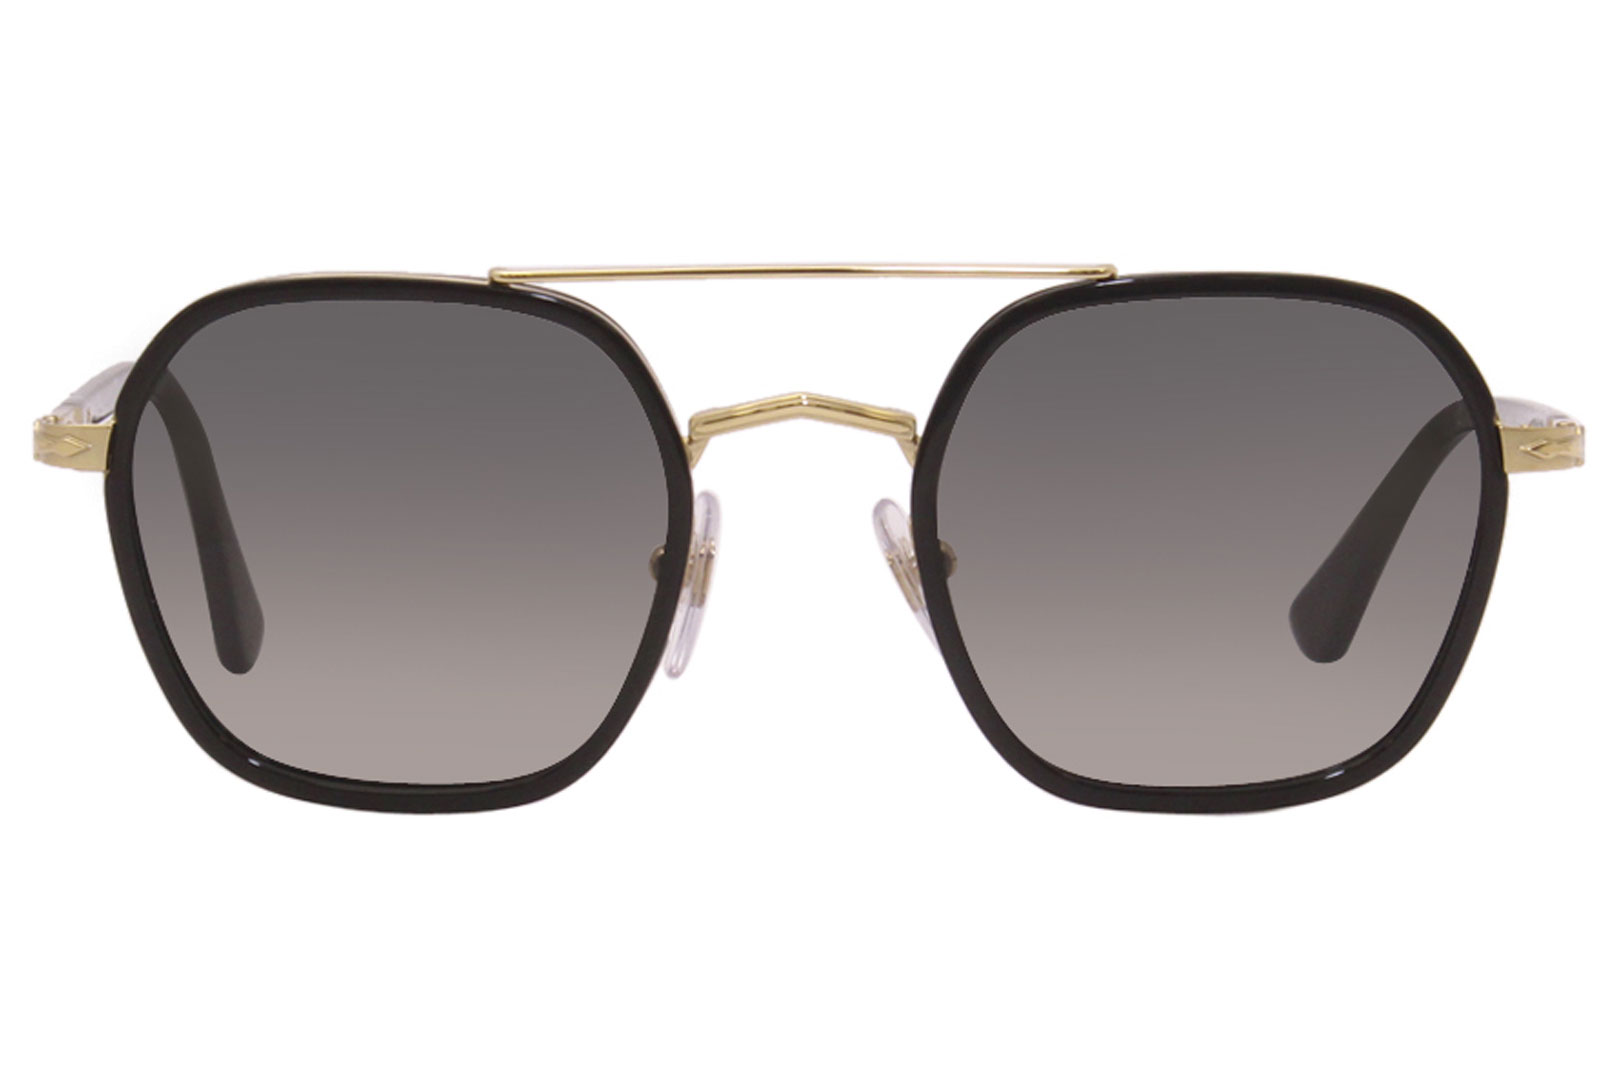 Persol 2480-S Sunglasses Men's Square Shape | EyeSpecs.com